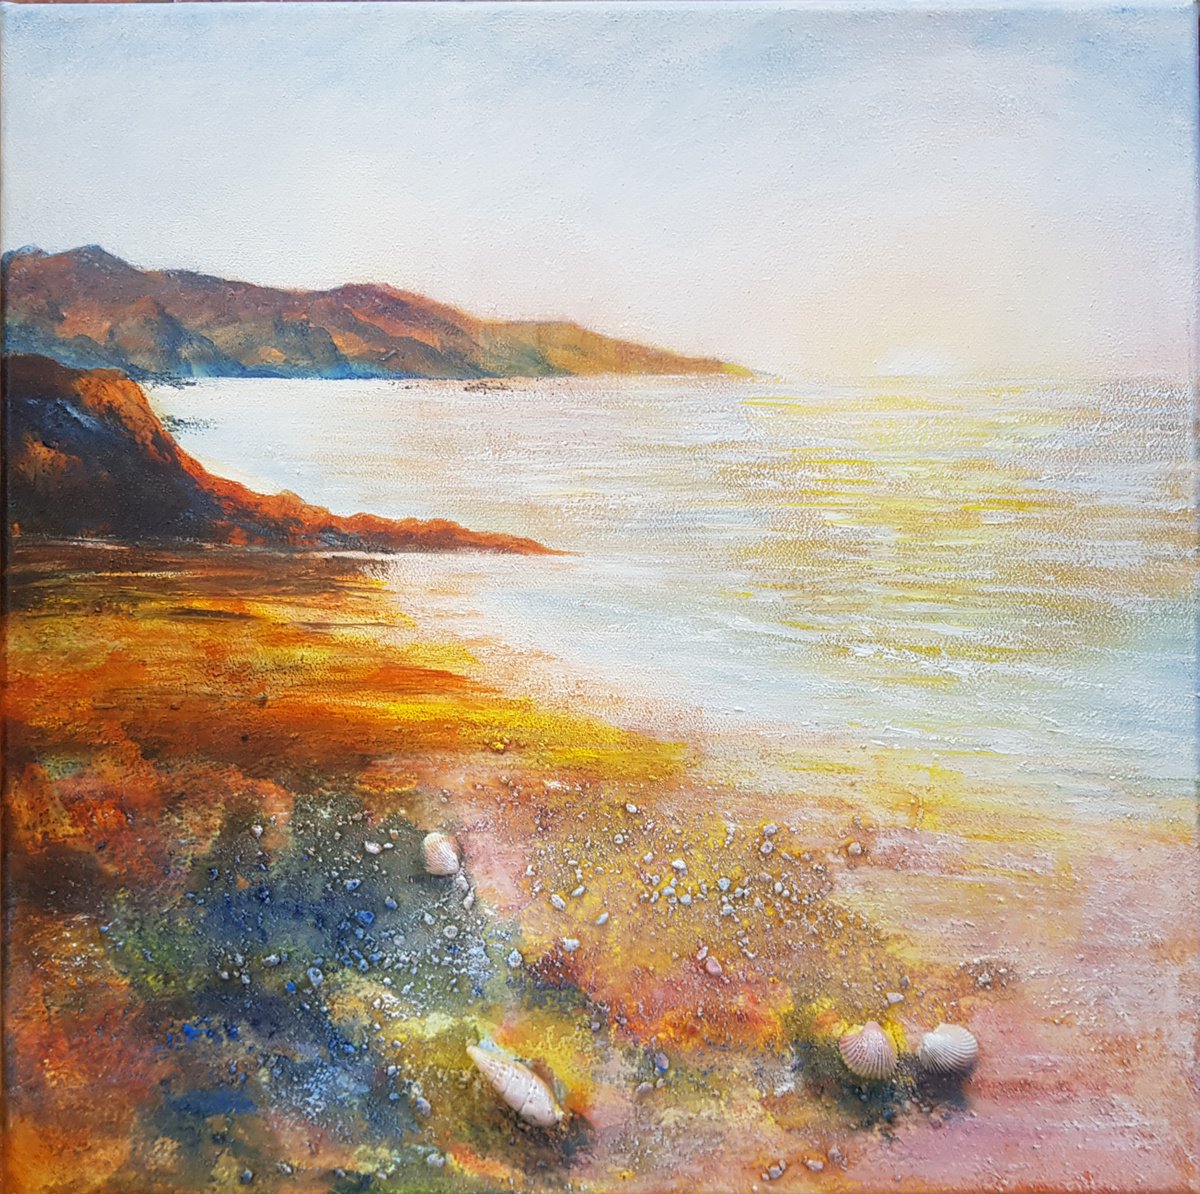 Evening Cove (textured seascape) by Michele Wallington